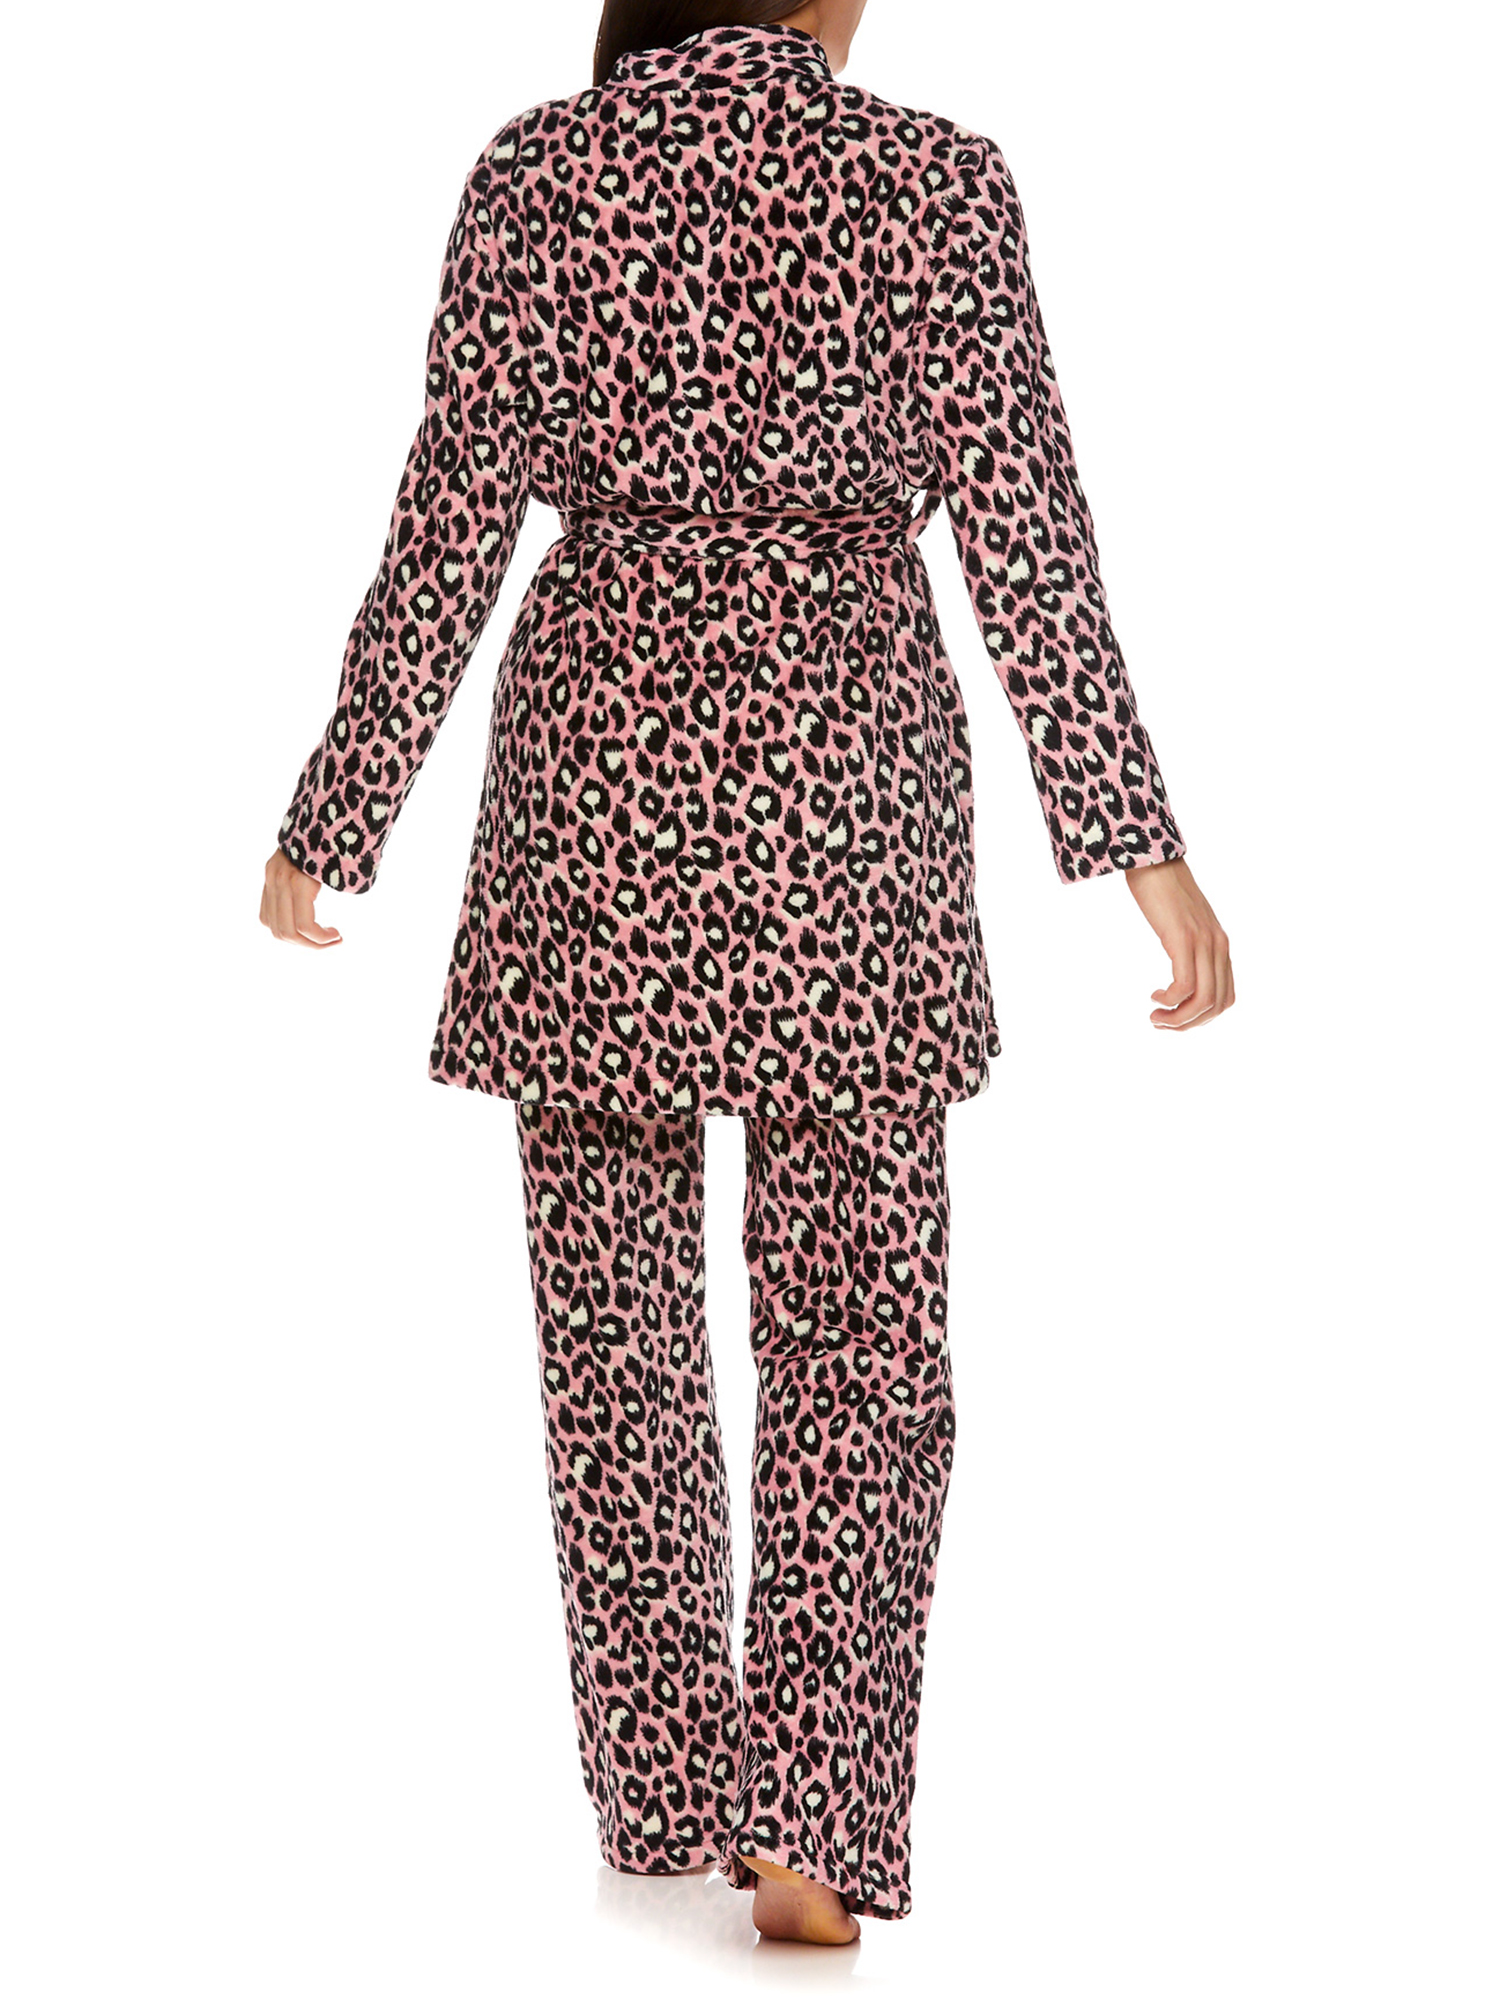 Sleep & Co. Women's & Women's Plus Plush Robe and Pajama Pant 2pc Set - image 3 of 6